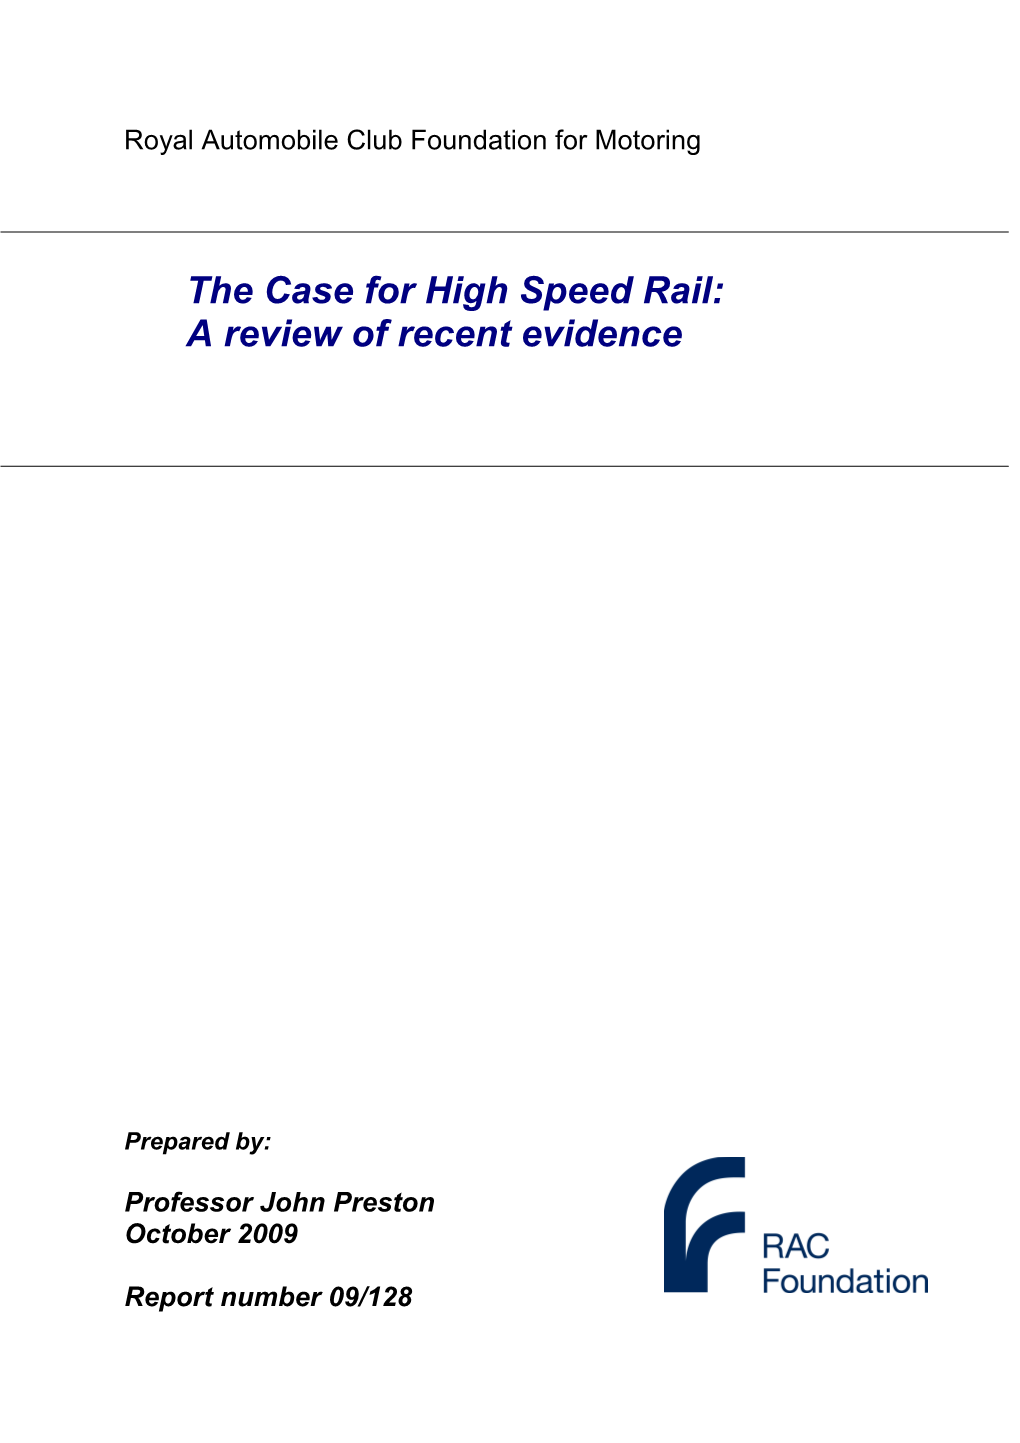 The Case for High Speed Rail (John Preston)